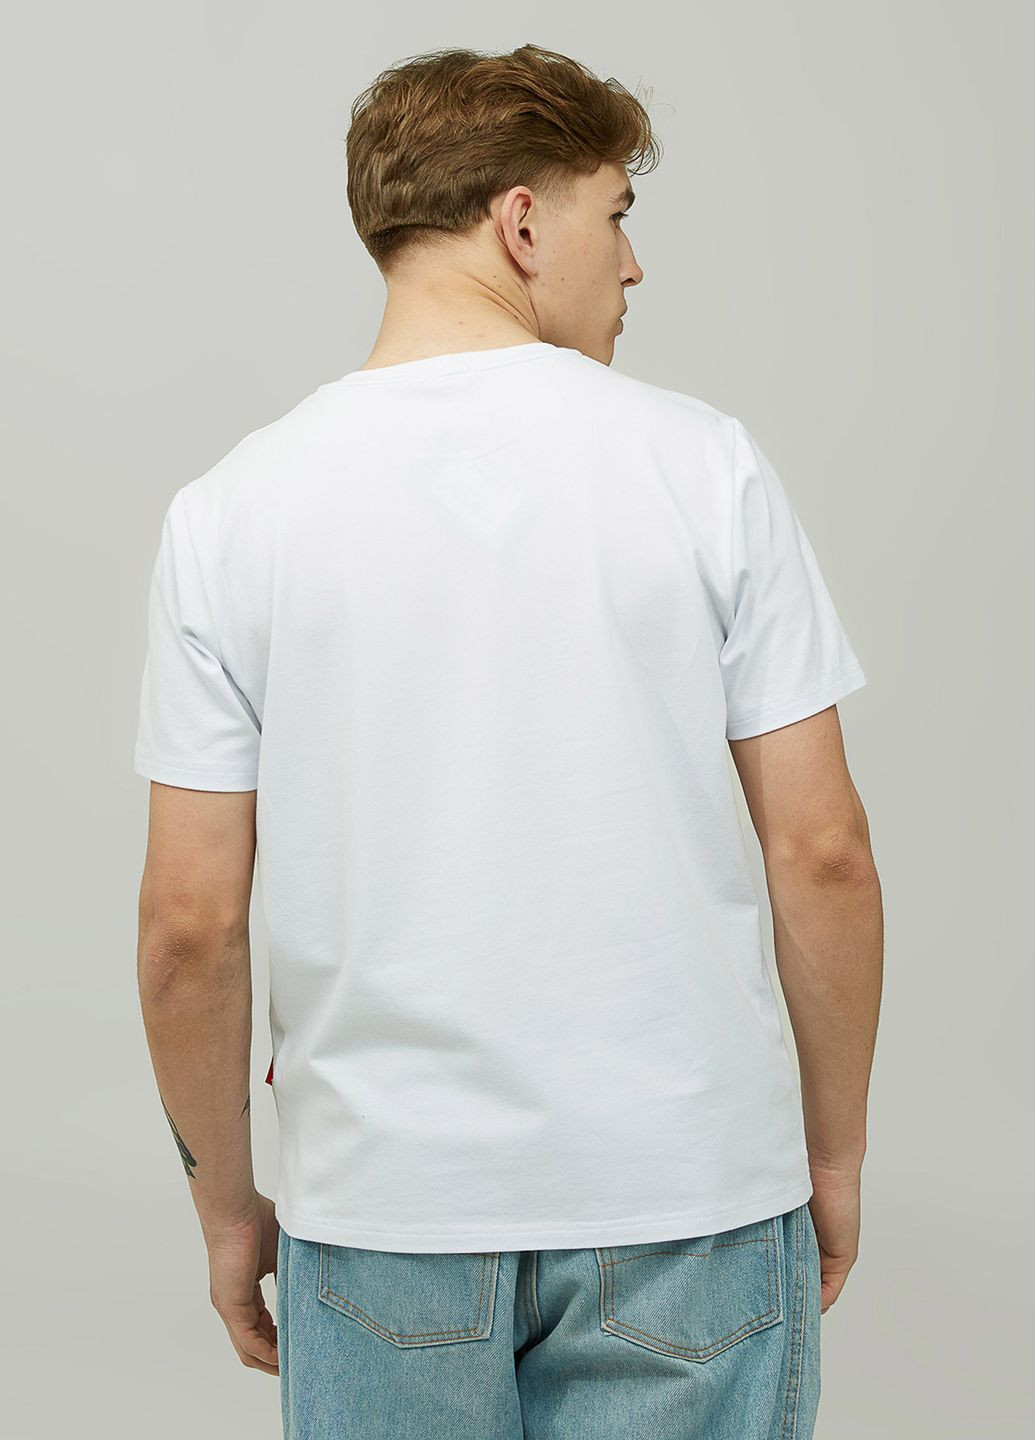 Біла чоловіча футболка ukrcapitalgreatpeople з коротким рукавом Gen